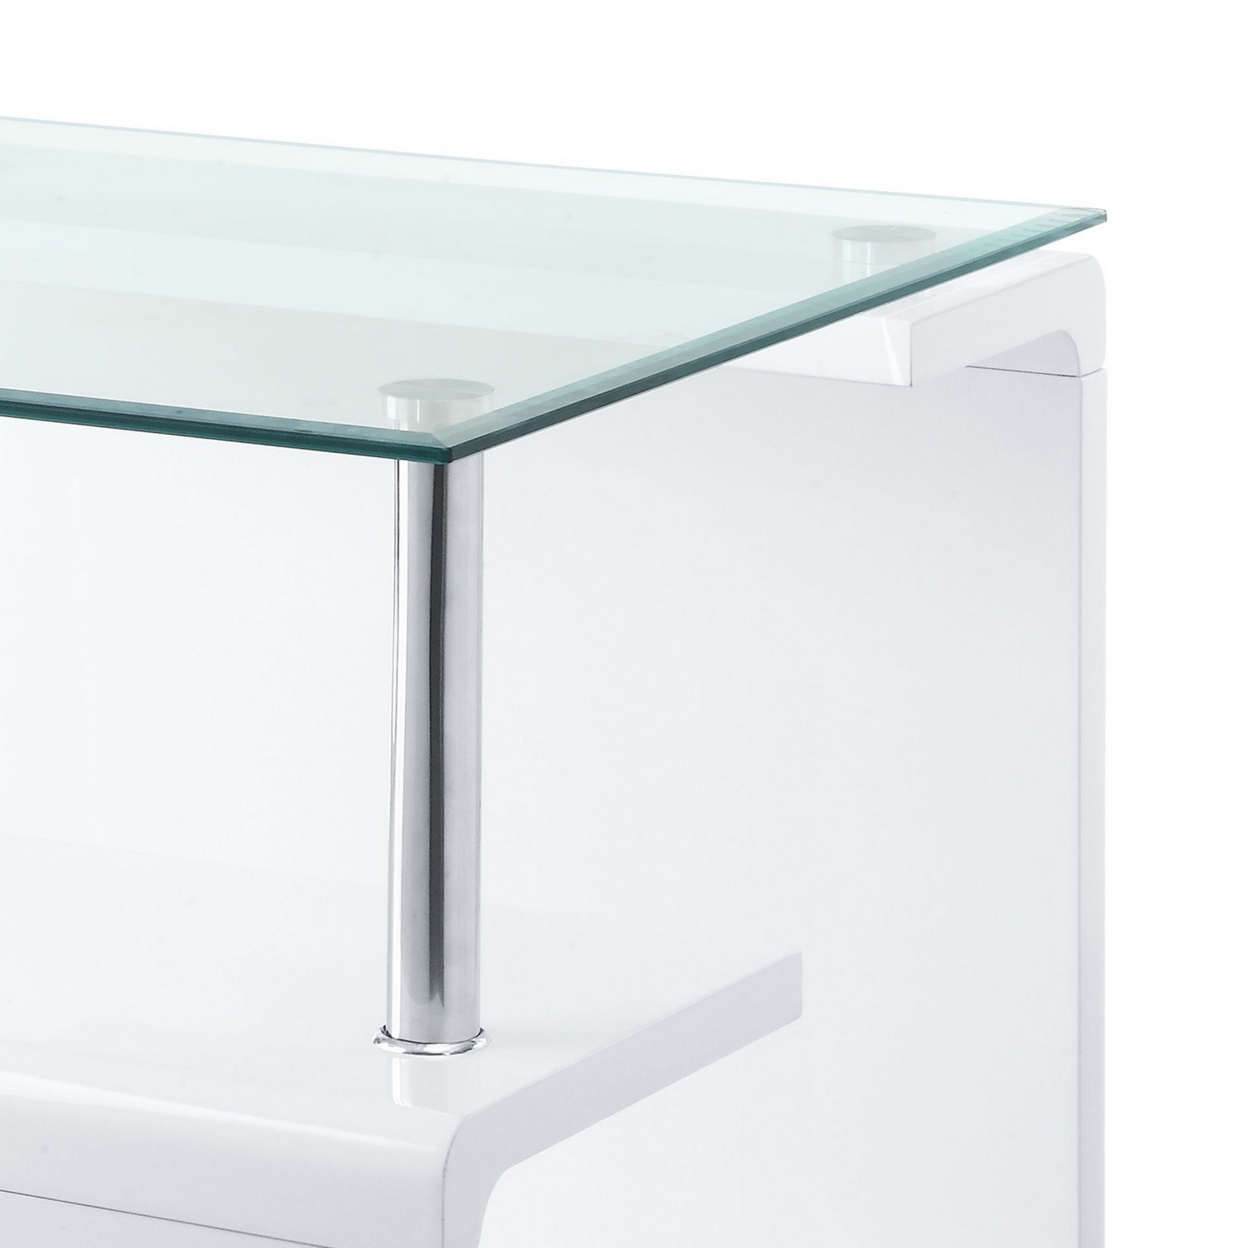 24 Inch Square Accent End Table, Glass Top, Open Shelf, White, Chrome- Saltoro Sherpi